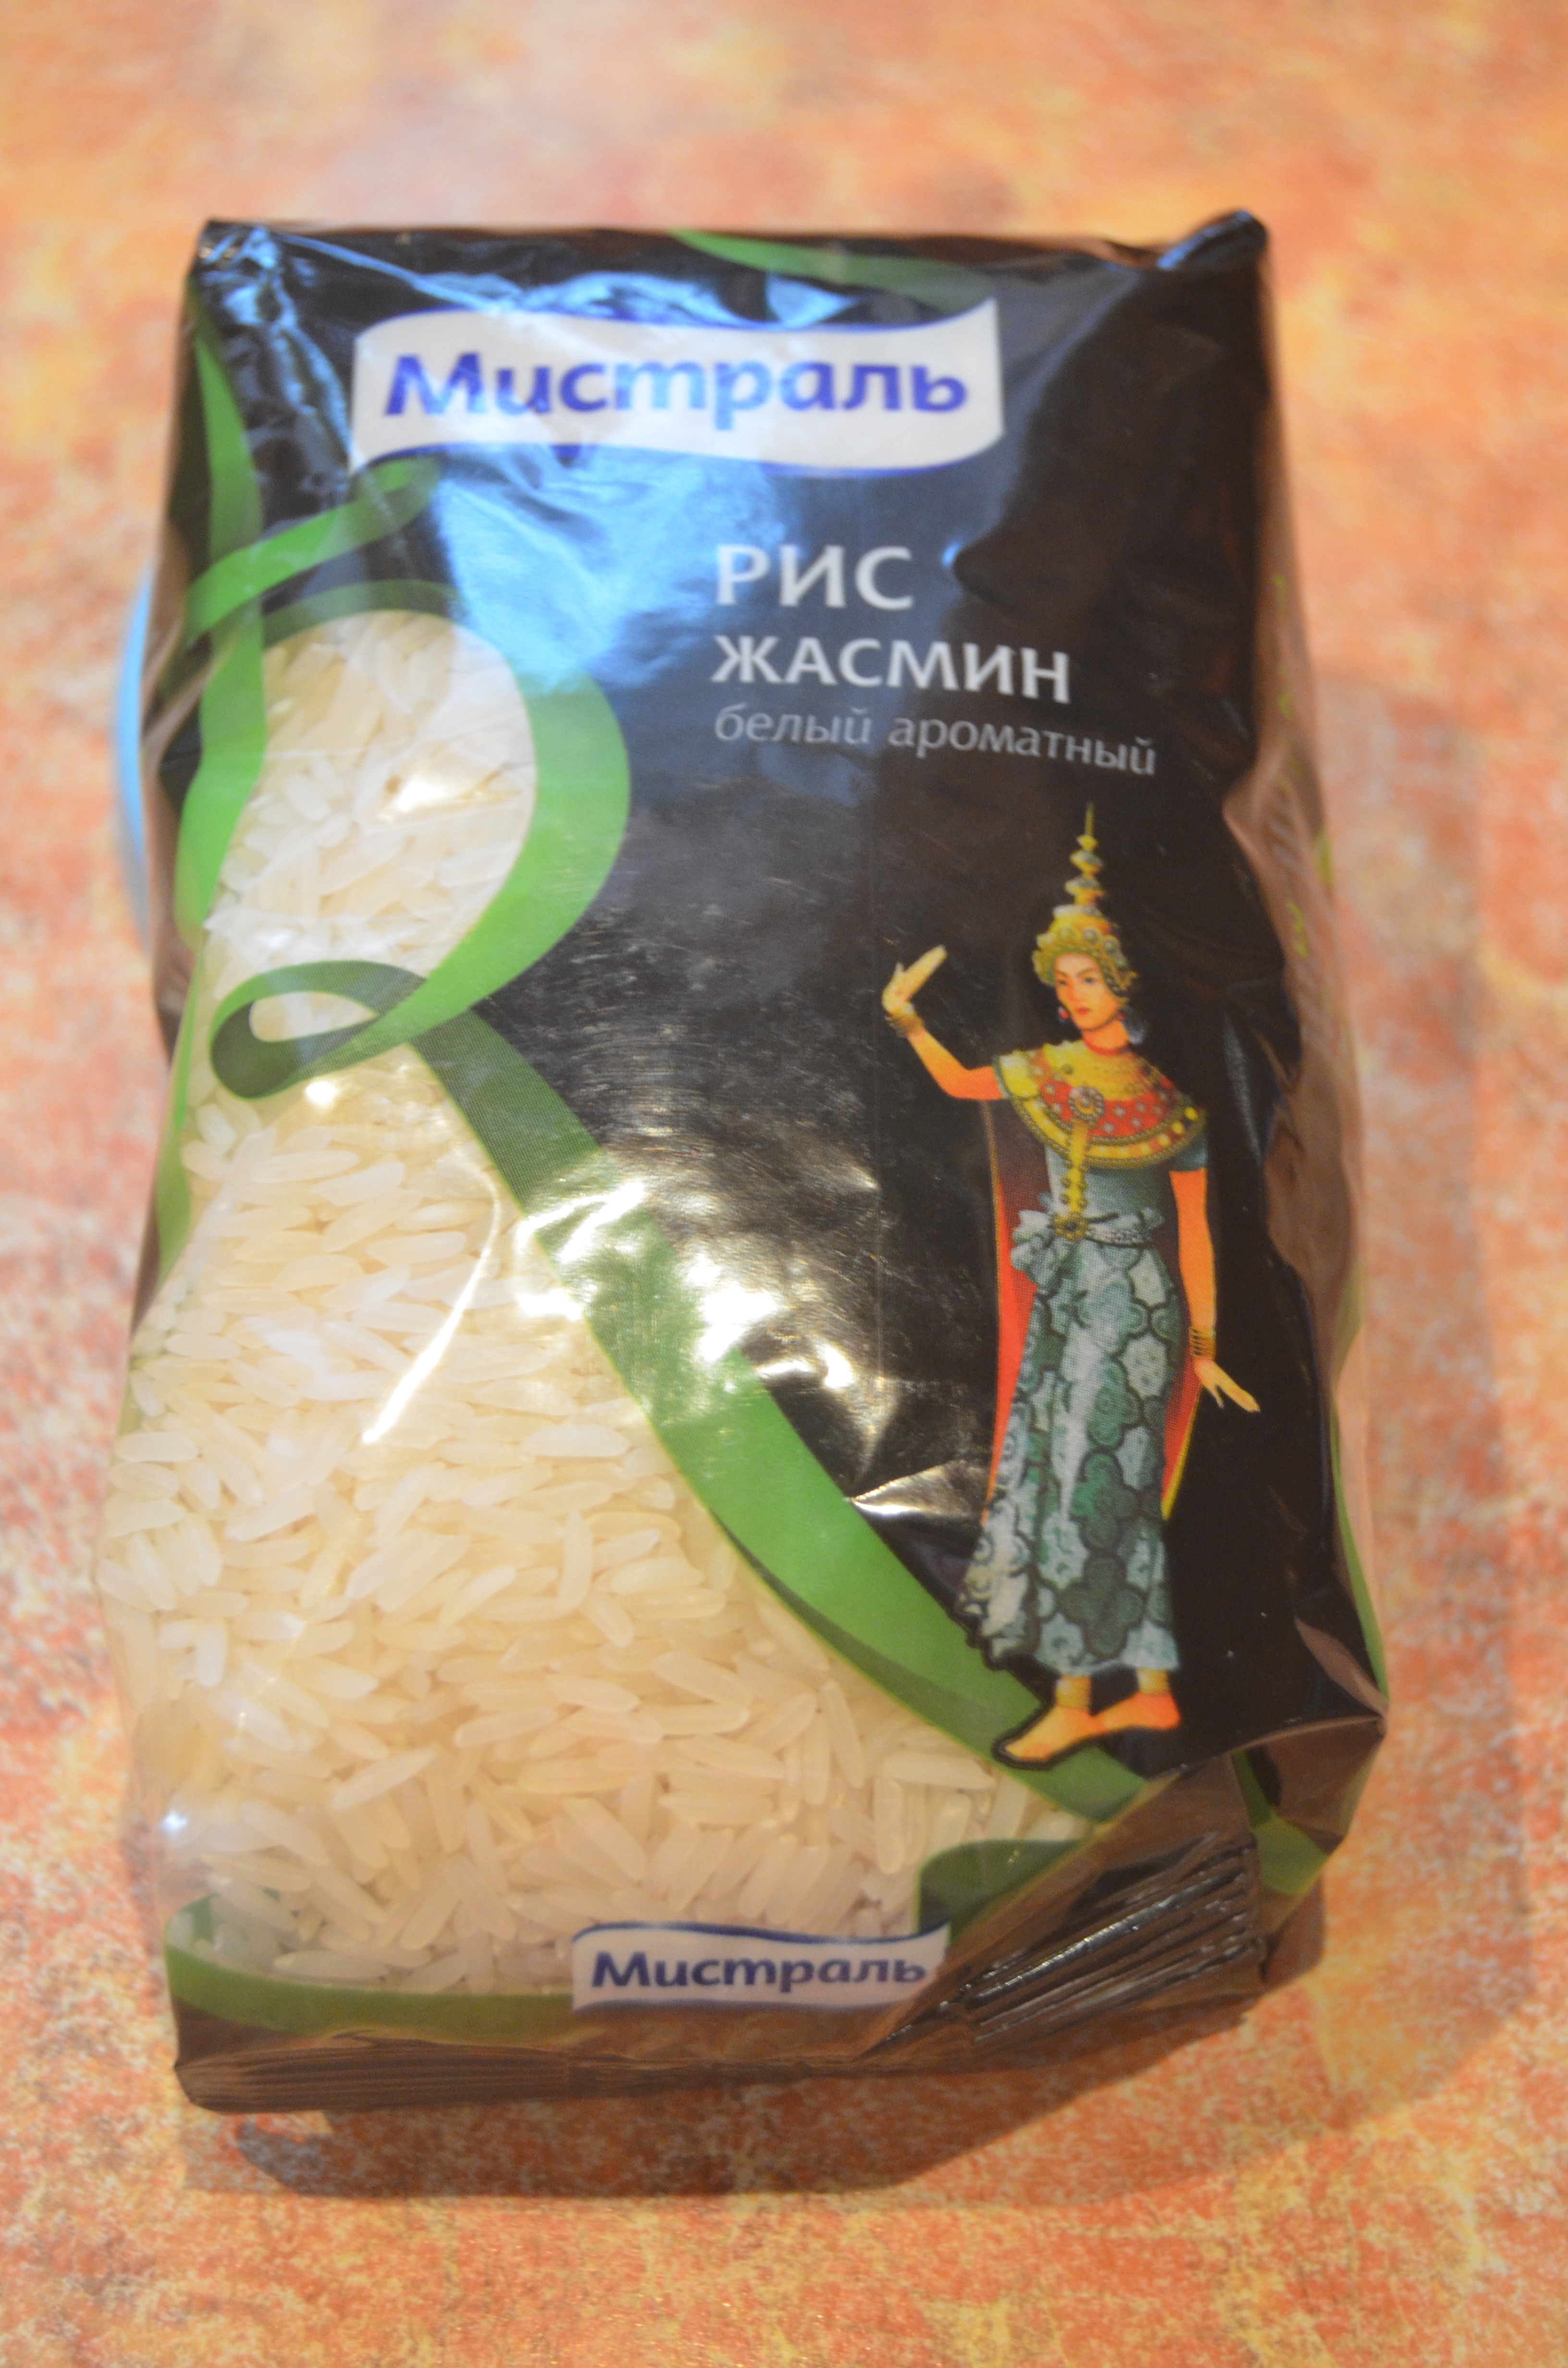 Говядина в азиатском соусе с рисом "жасмин": шаг 1